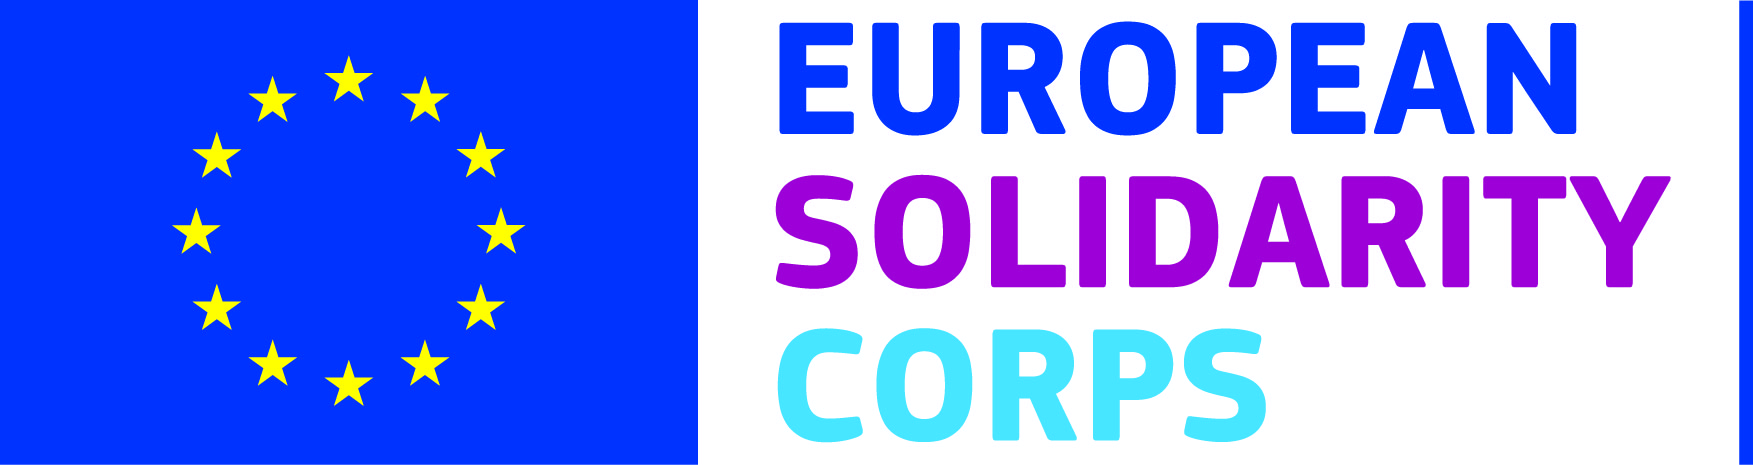 European Solidarity Corps logo